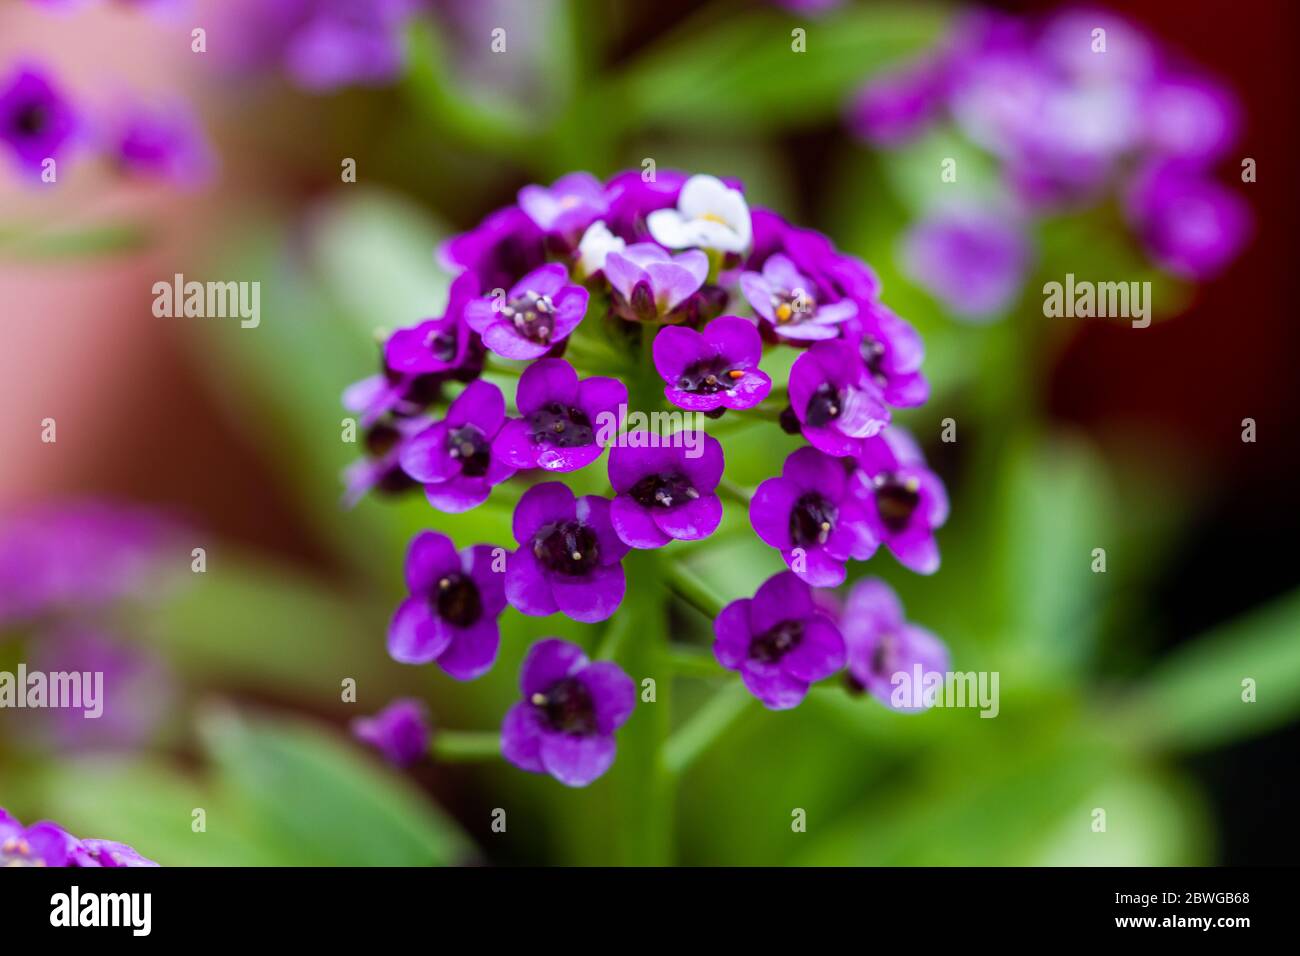 Flores de Lobularia maritima violeta, conocidas como Alyssum maritimum,  alyssum dulce o alison dulce Fotografía de stock - Alamy